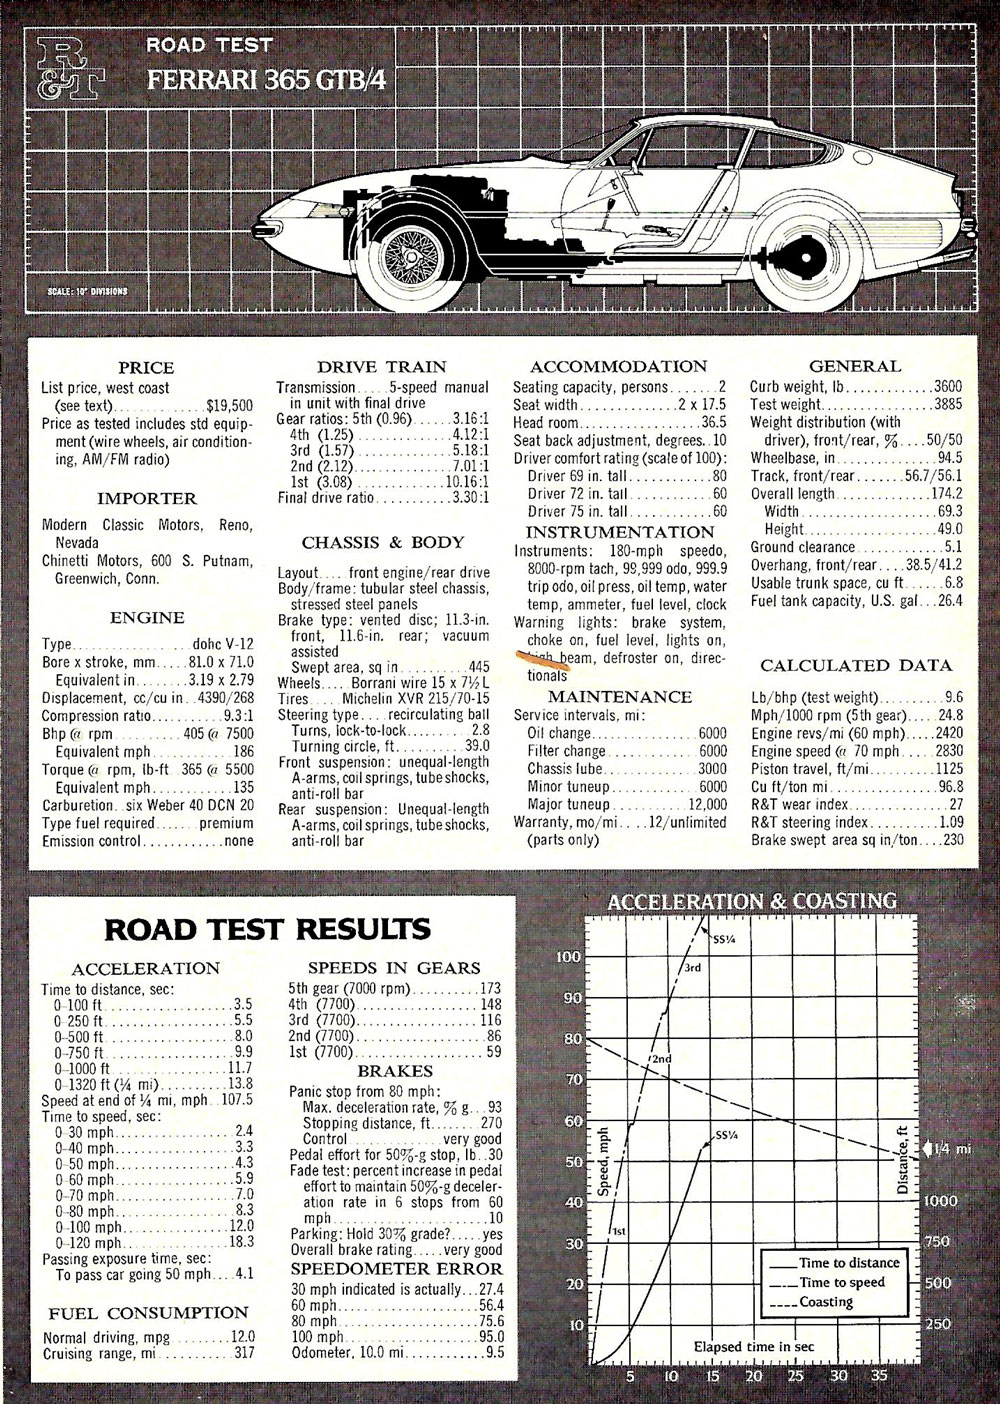 Ferrari 365 GTB Data Sheet